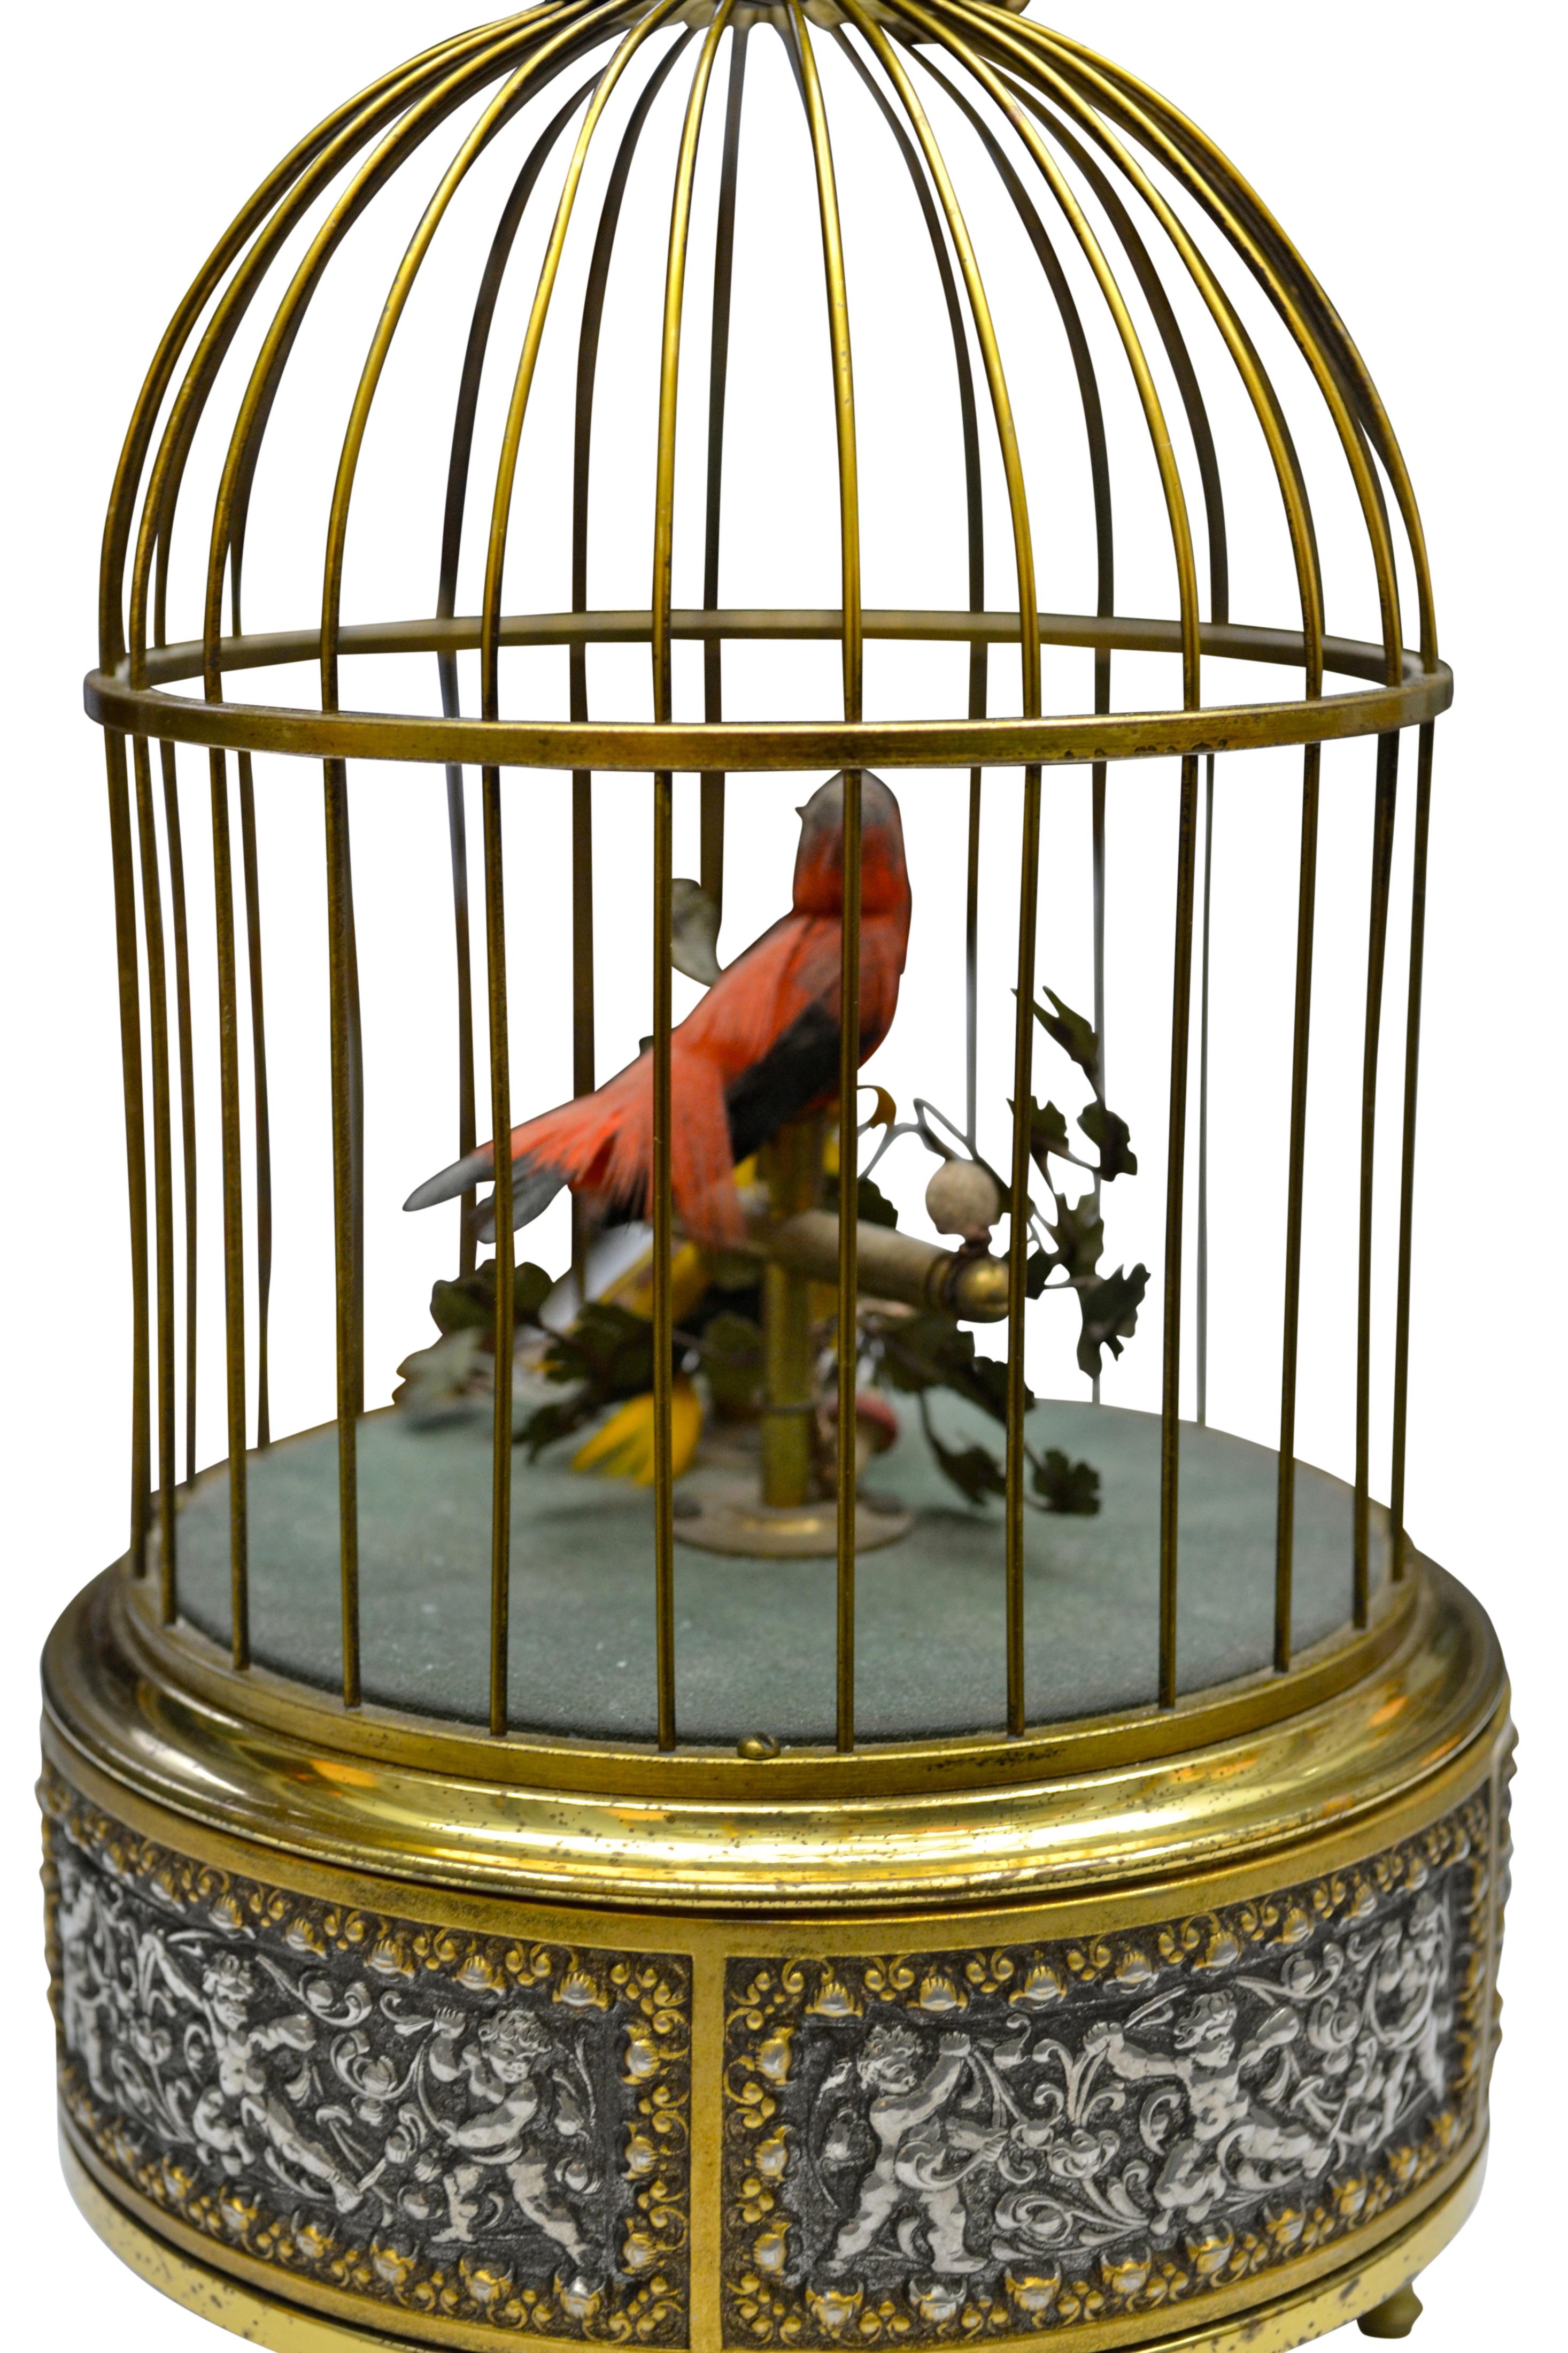 wind up singing bird in cage